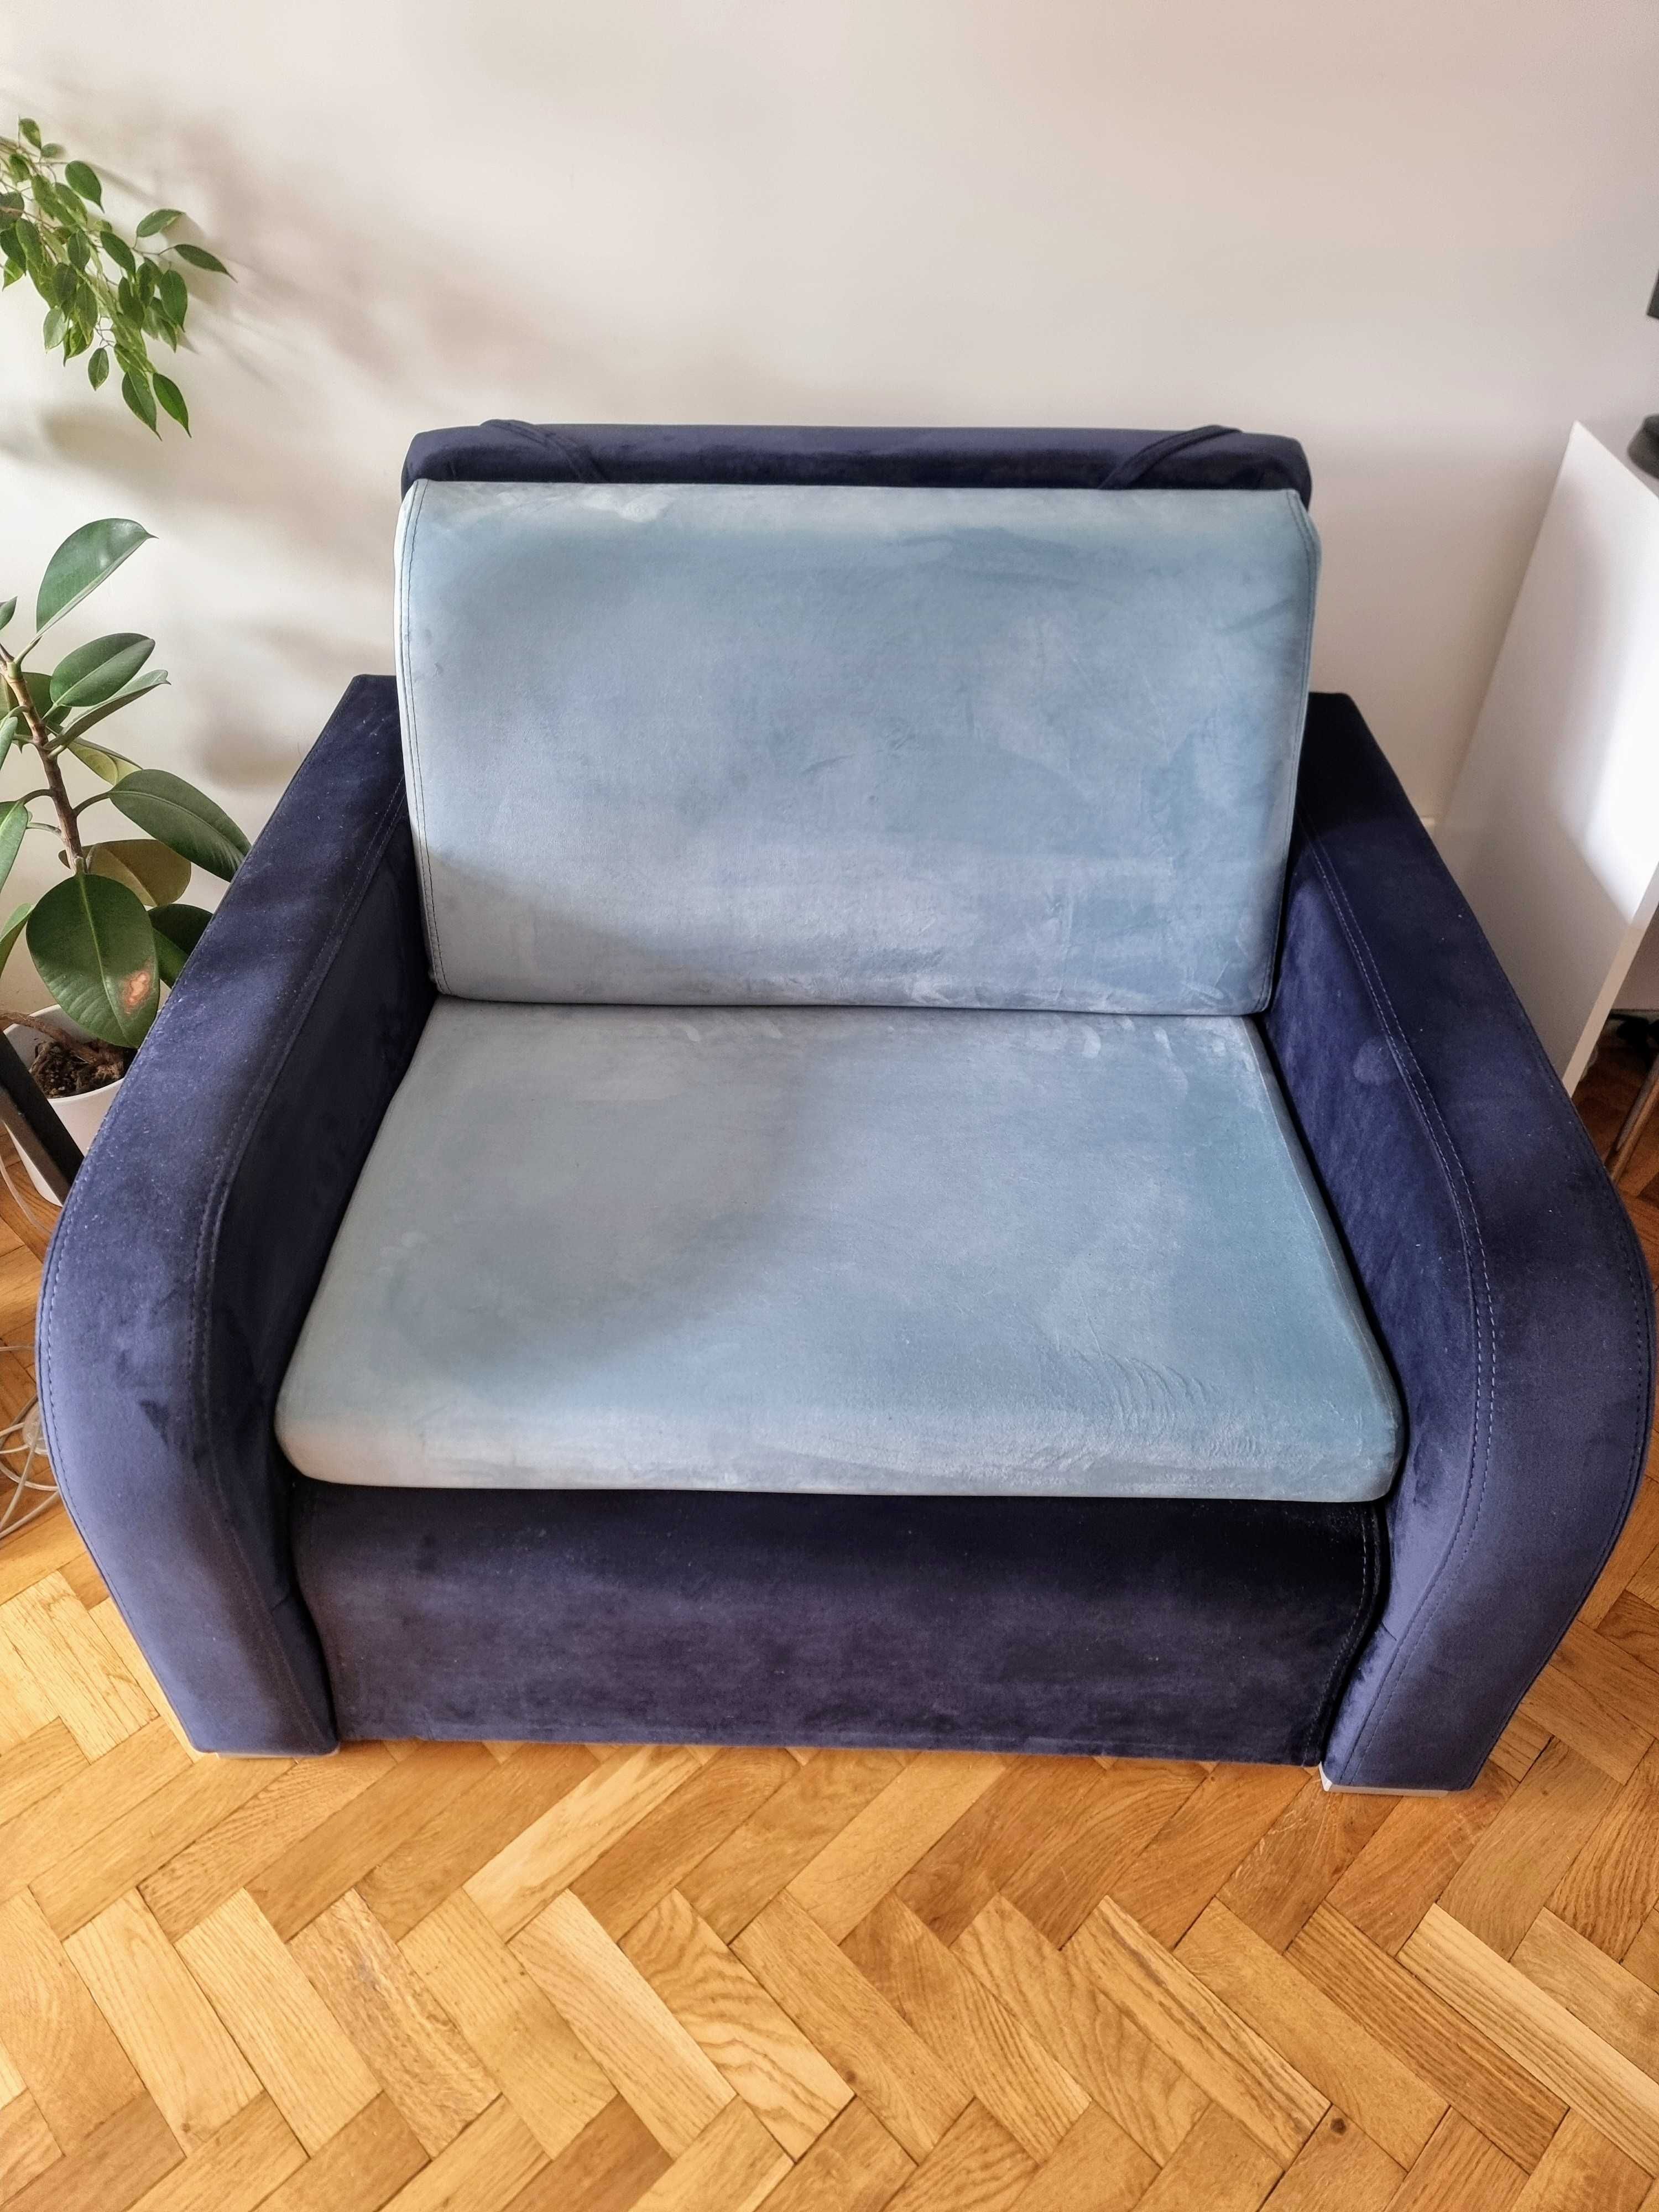 Fotel/sofa 1 osobowa